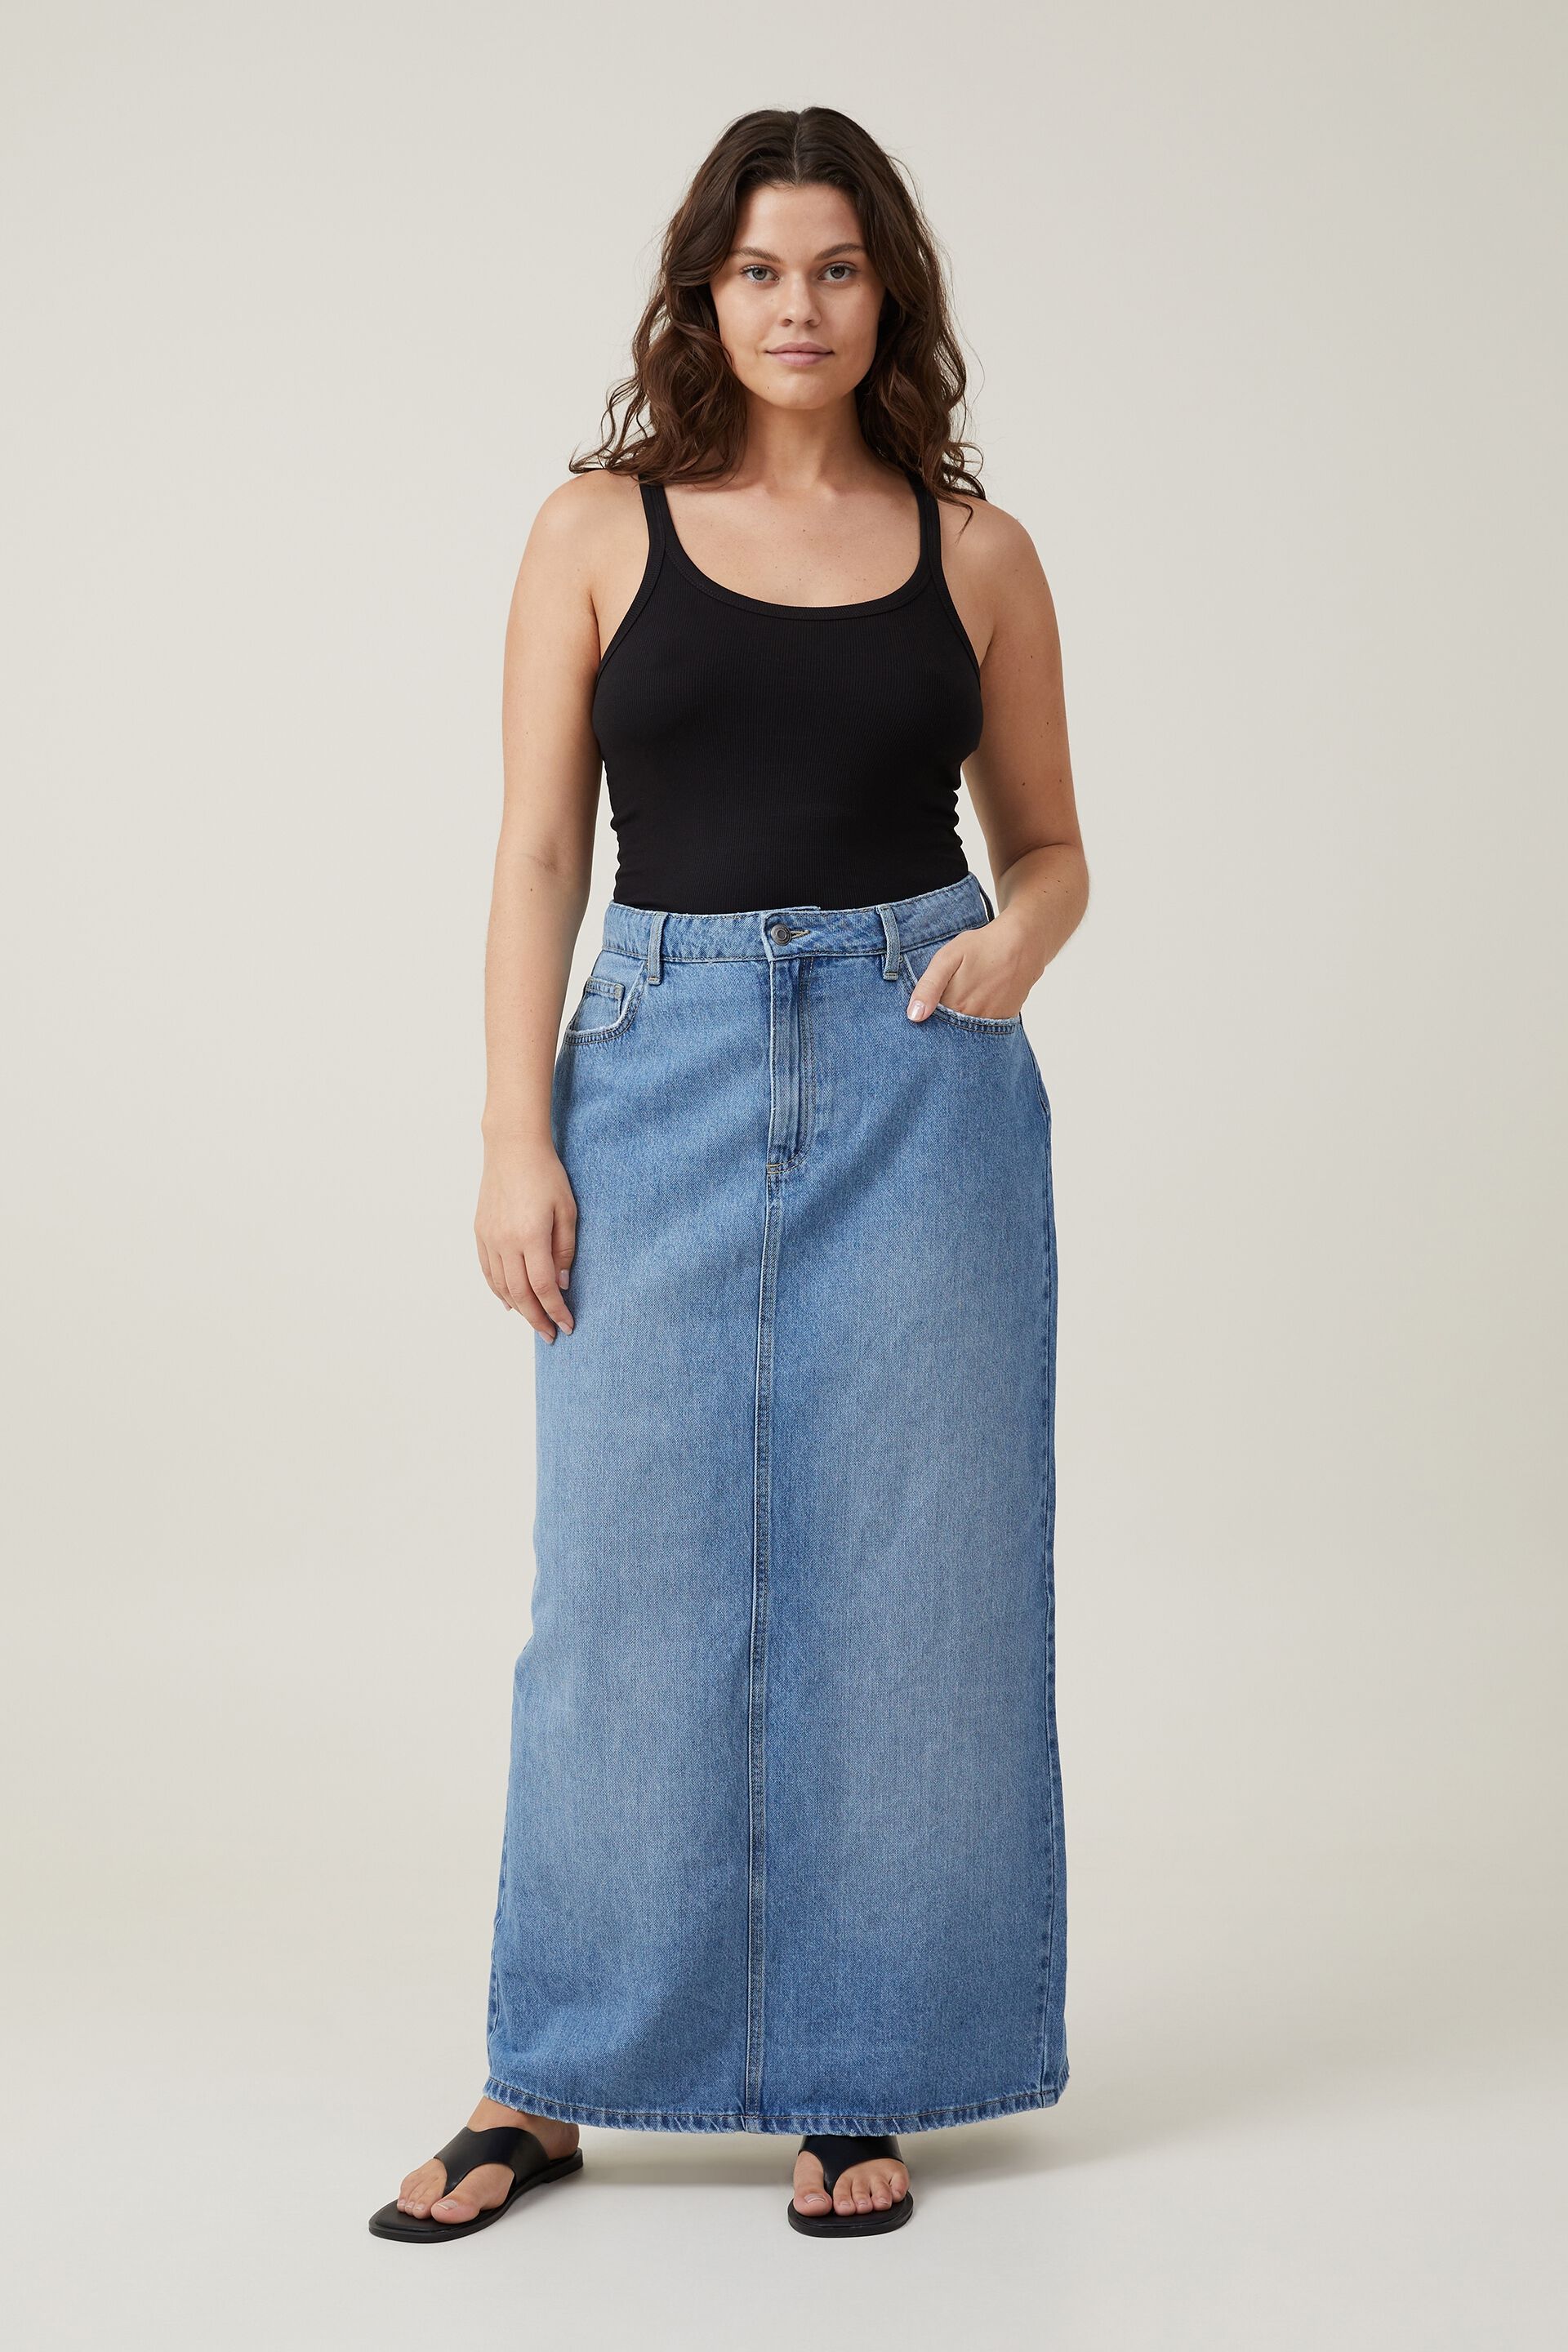 Cato Fashions | Cato Plus Size Stretchy Denim Skirt